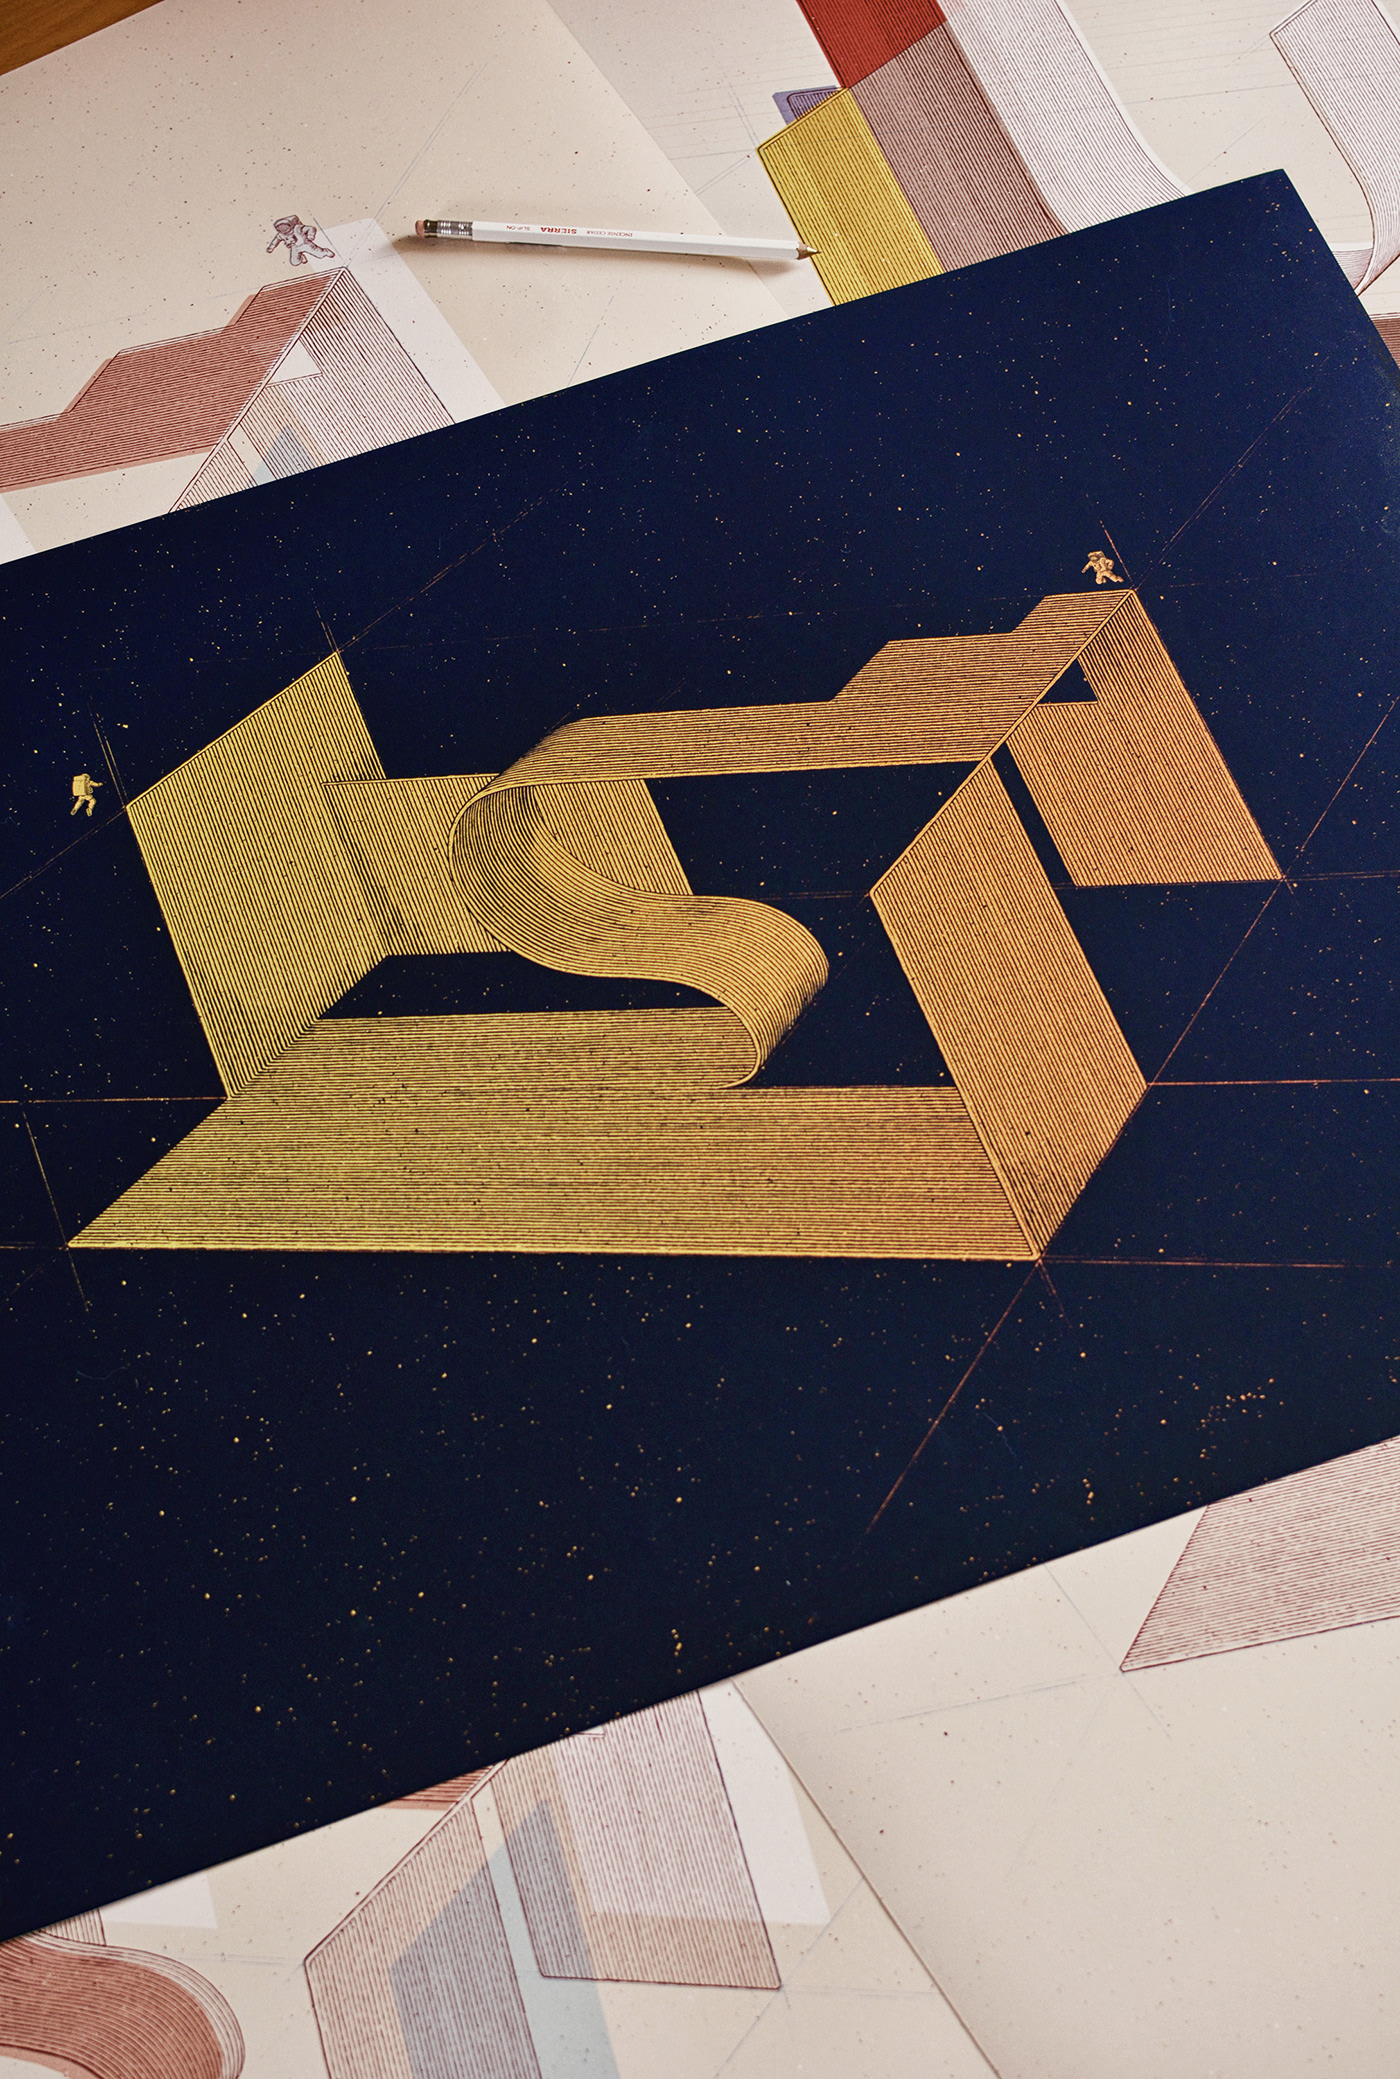 print constructivism katarzyna kobro Strzeminski bauhaus poster skate Space  astronaut geometry